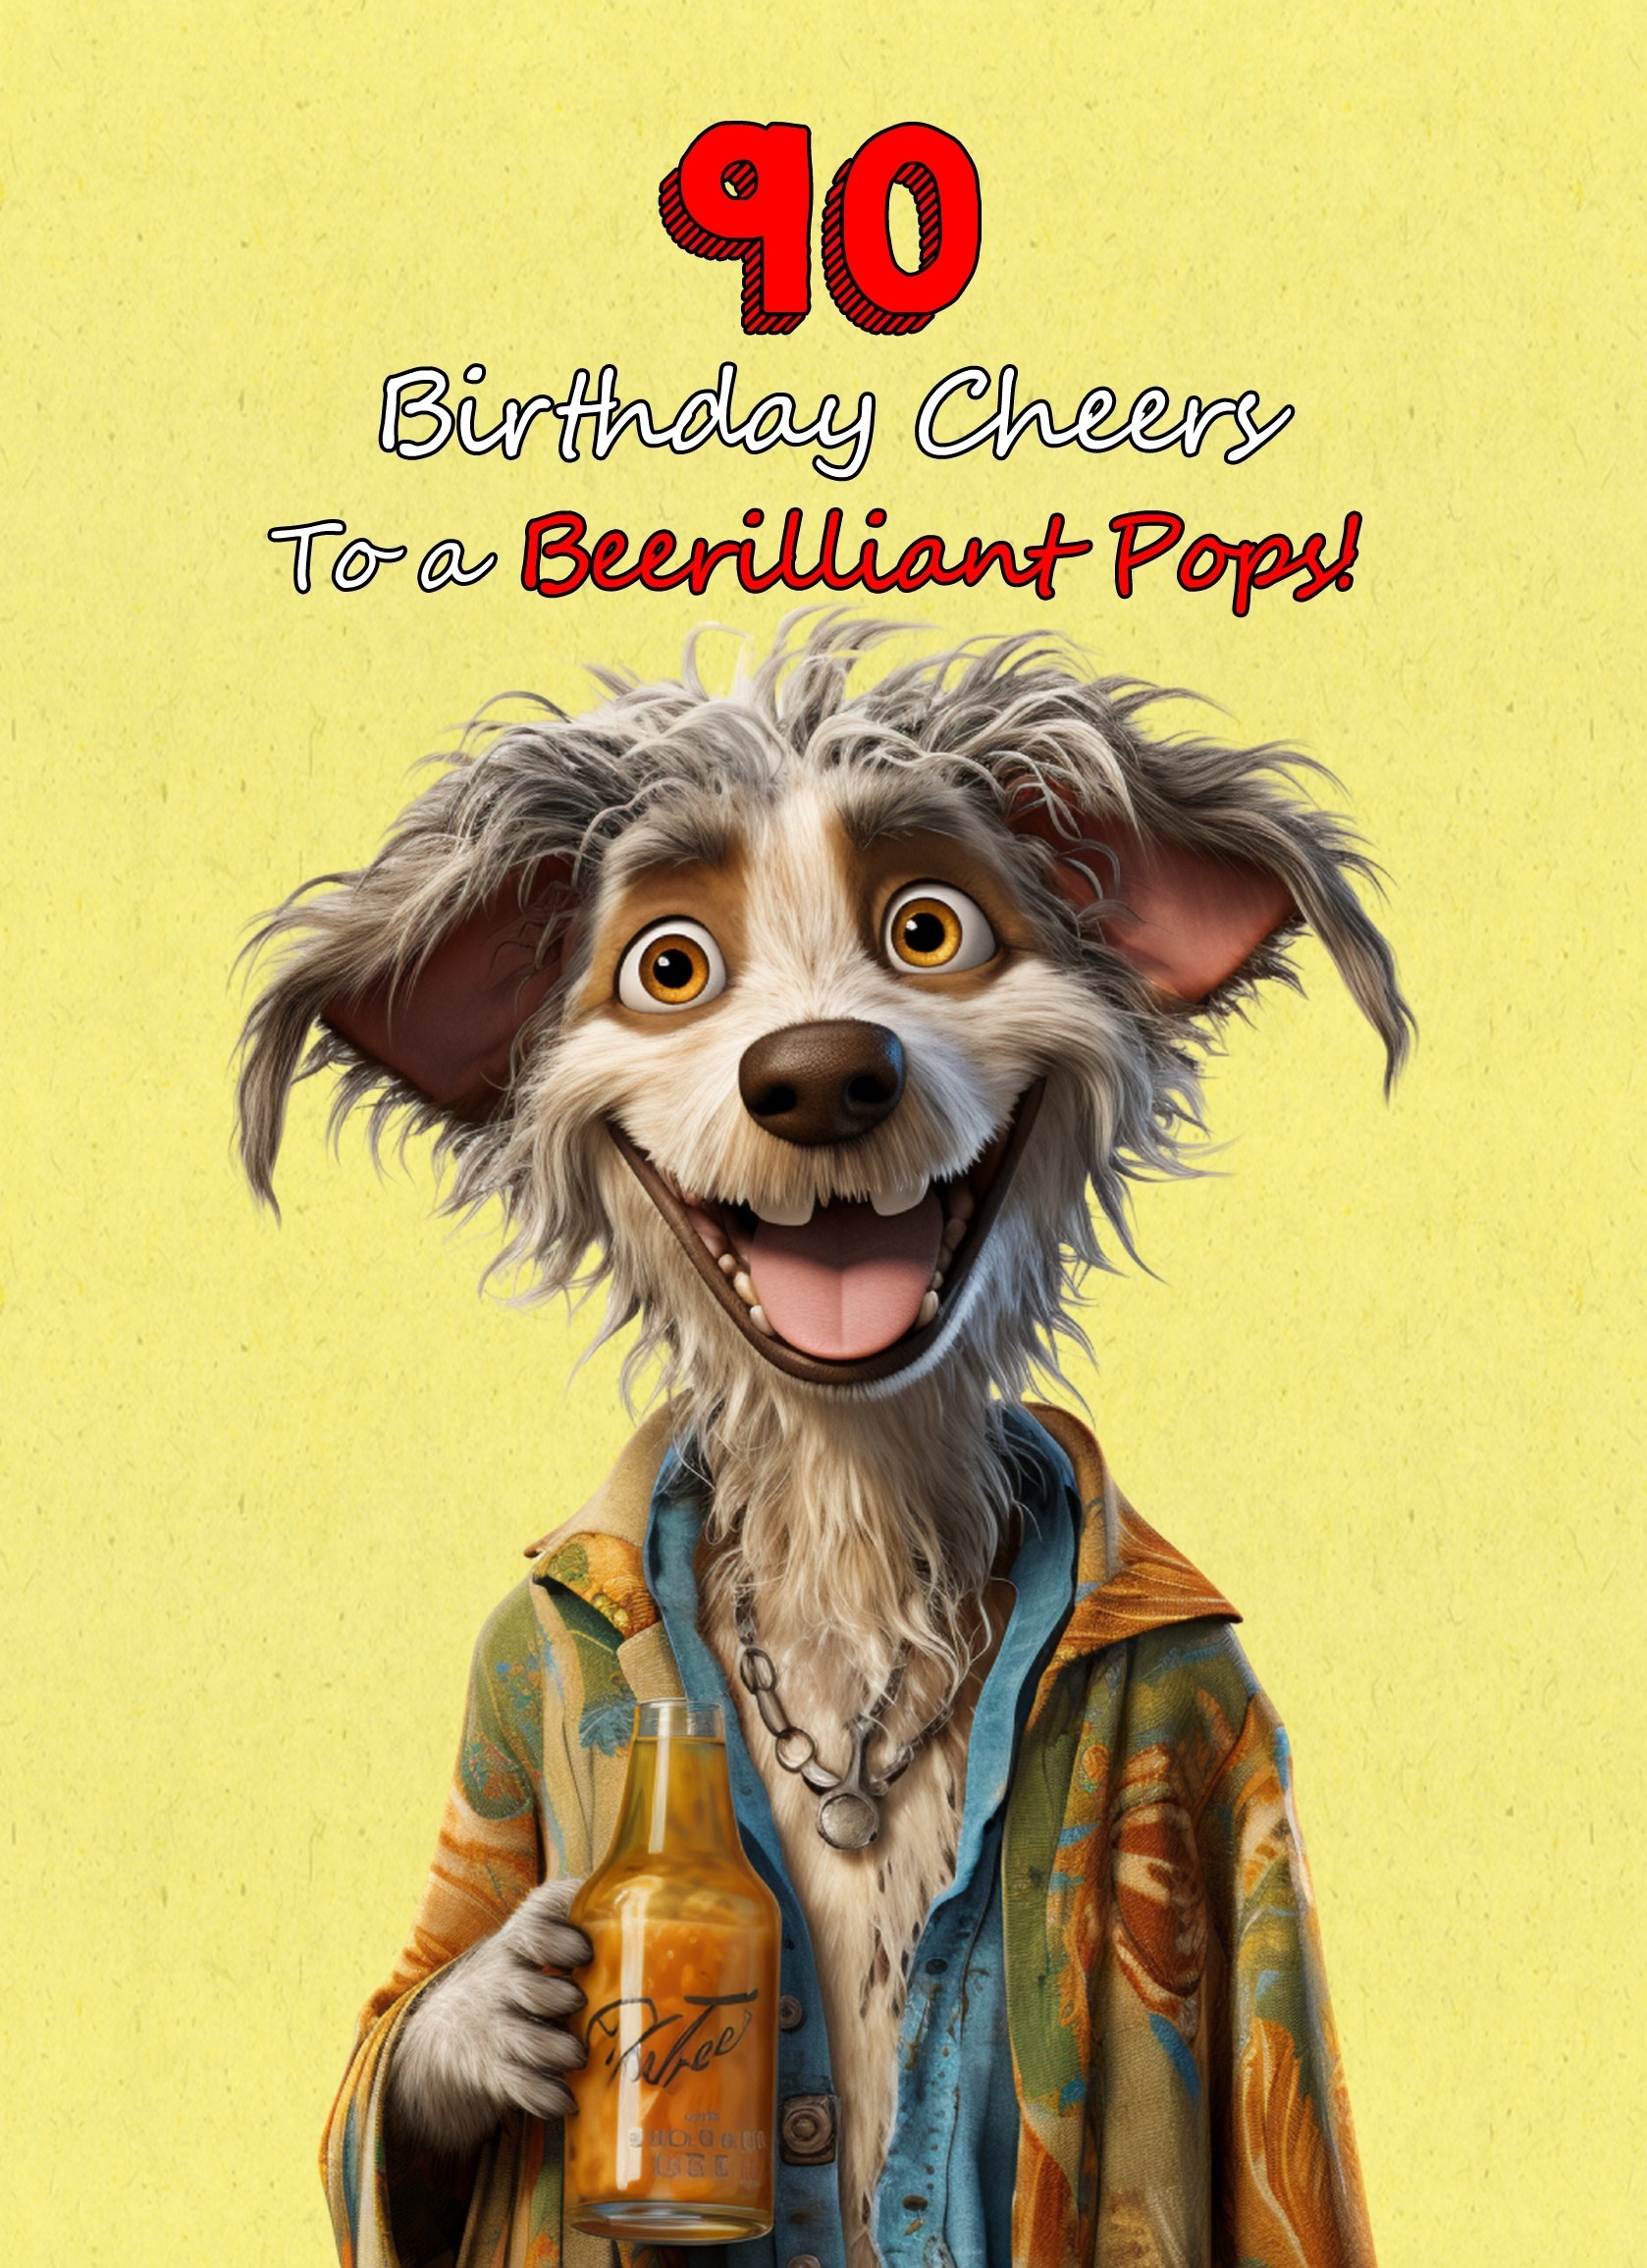 Pops 90th Birthday Card (Funny Beerilliant Birthday Cheers, Design 2)